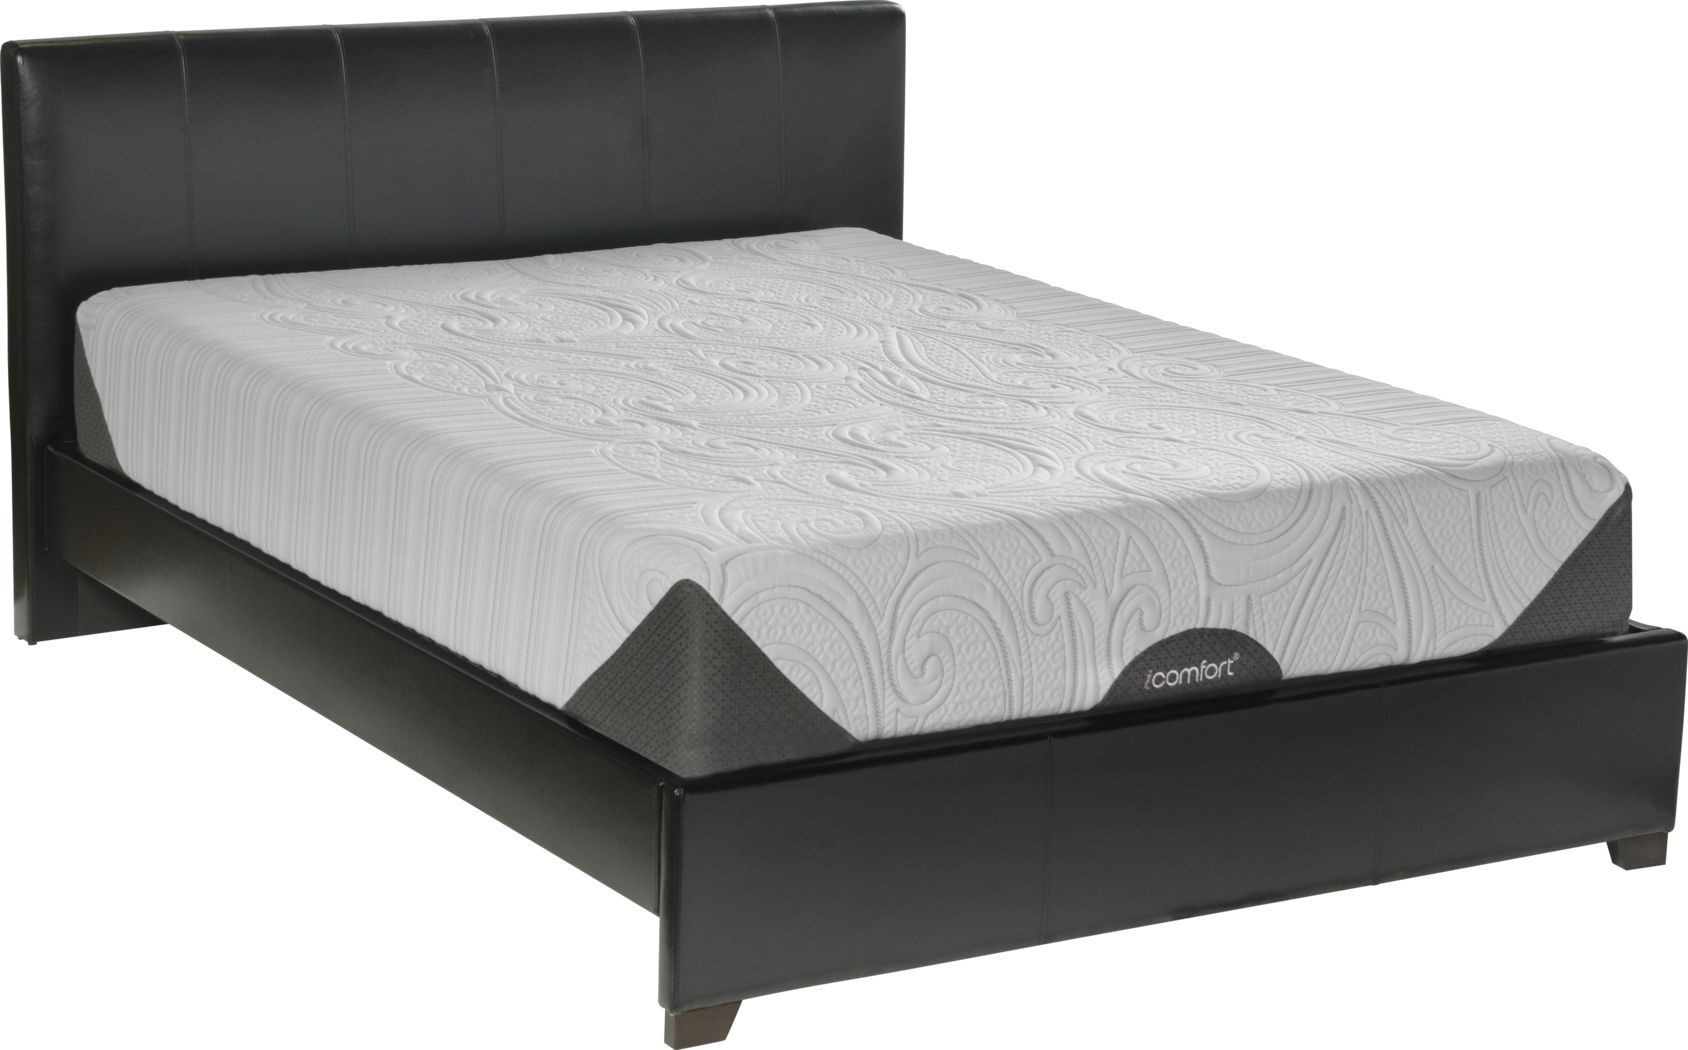 black mattress sale icomfort